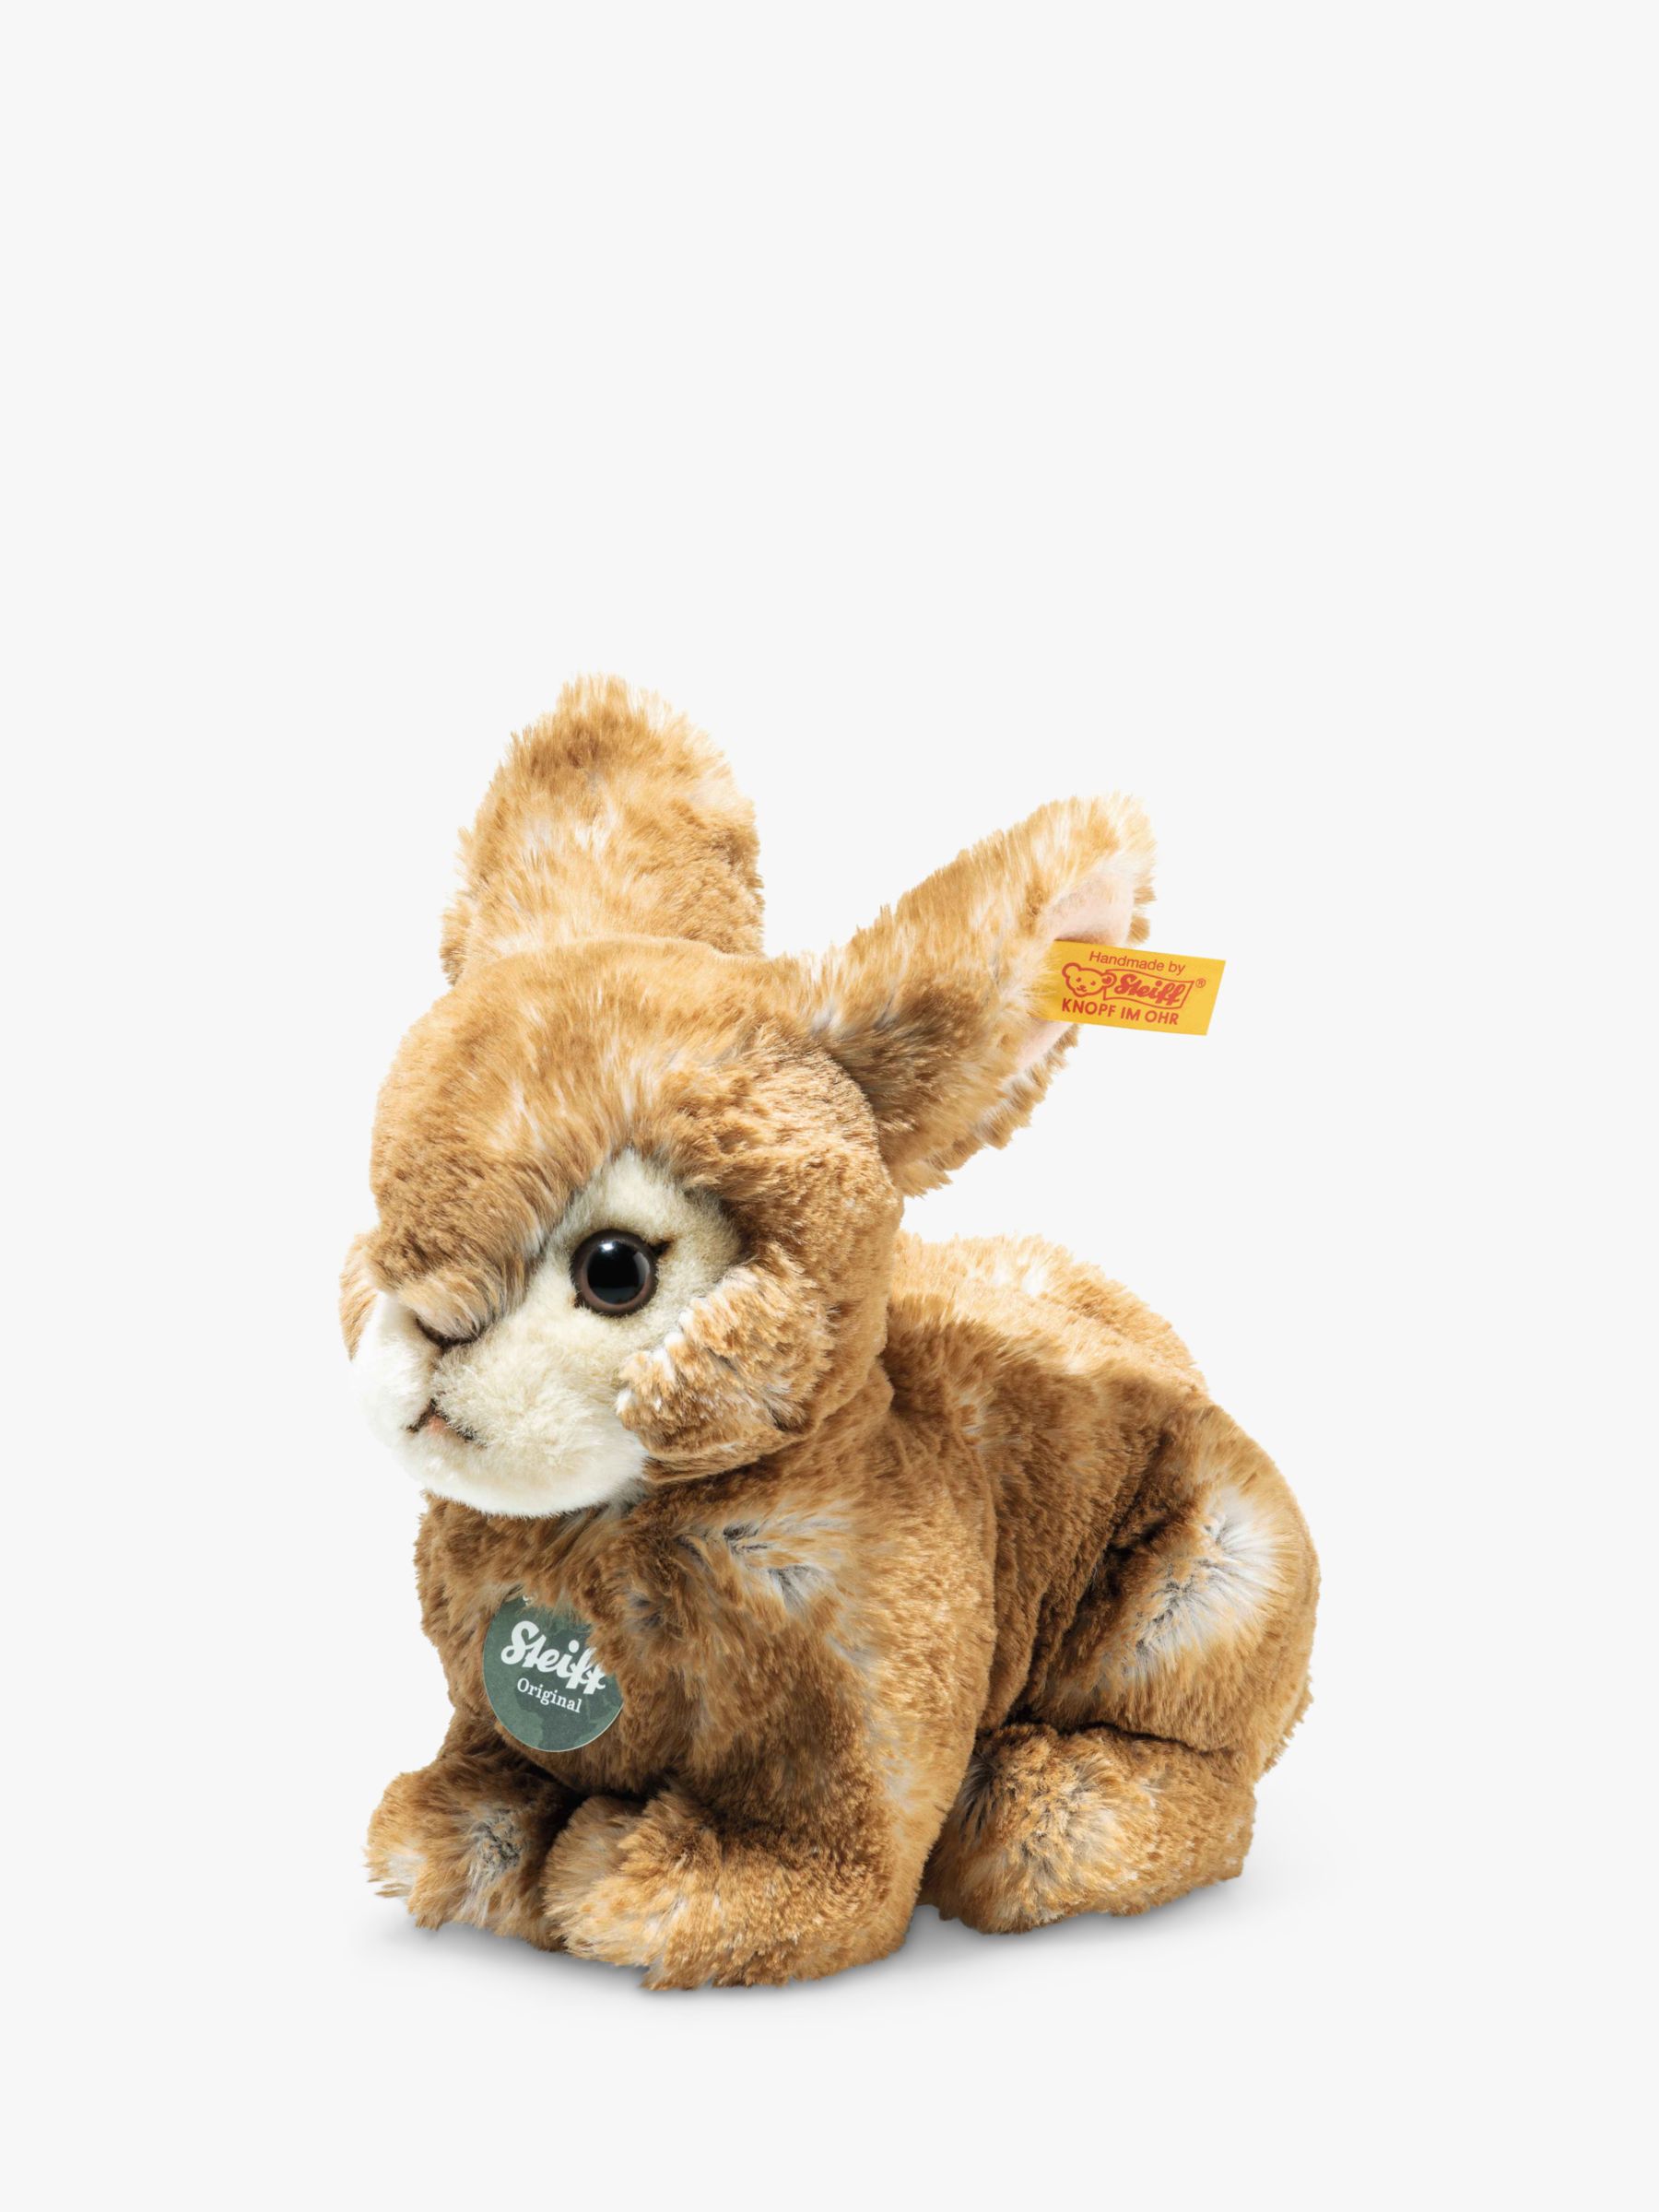 Zappi Co Plush Children's Stuffed Soft Cuddly Plush Toy-Part of